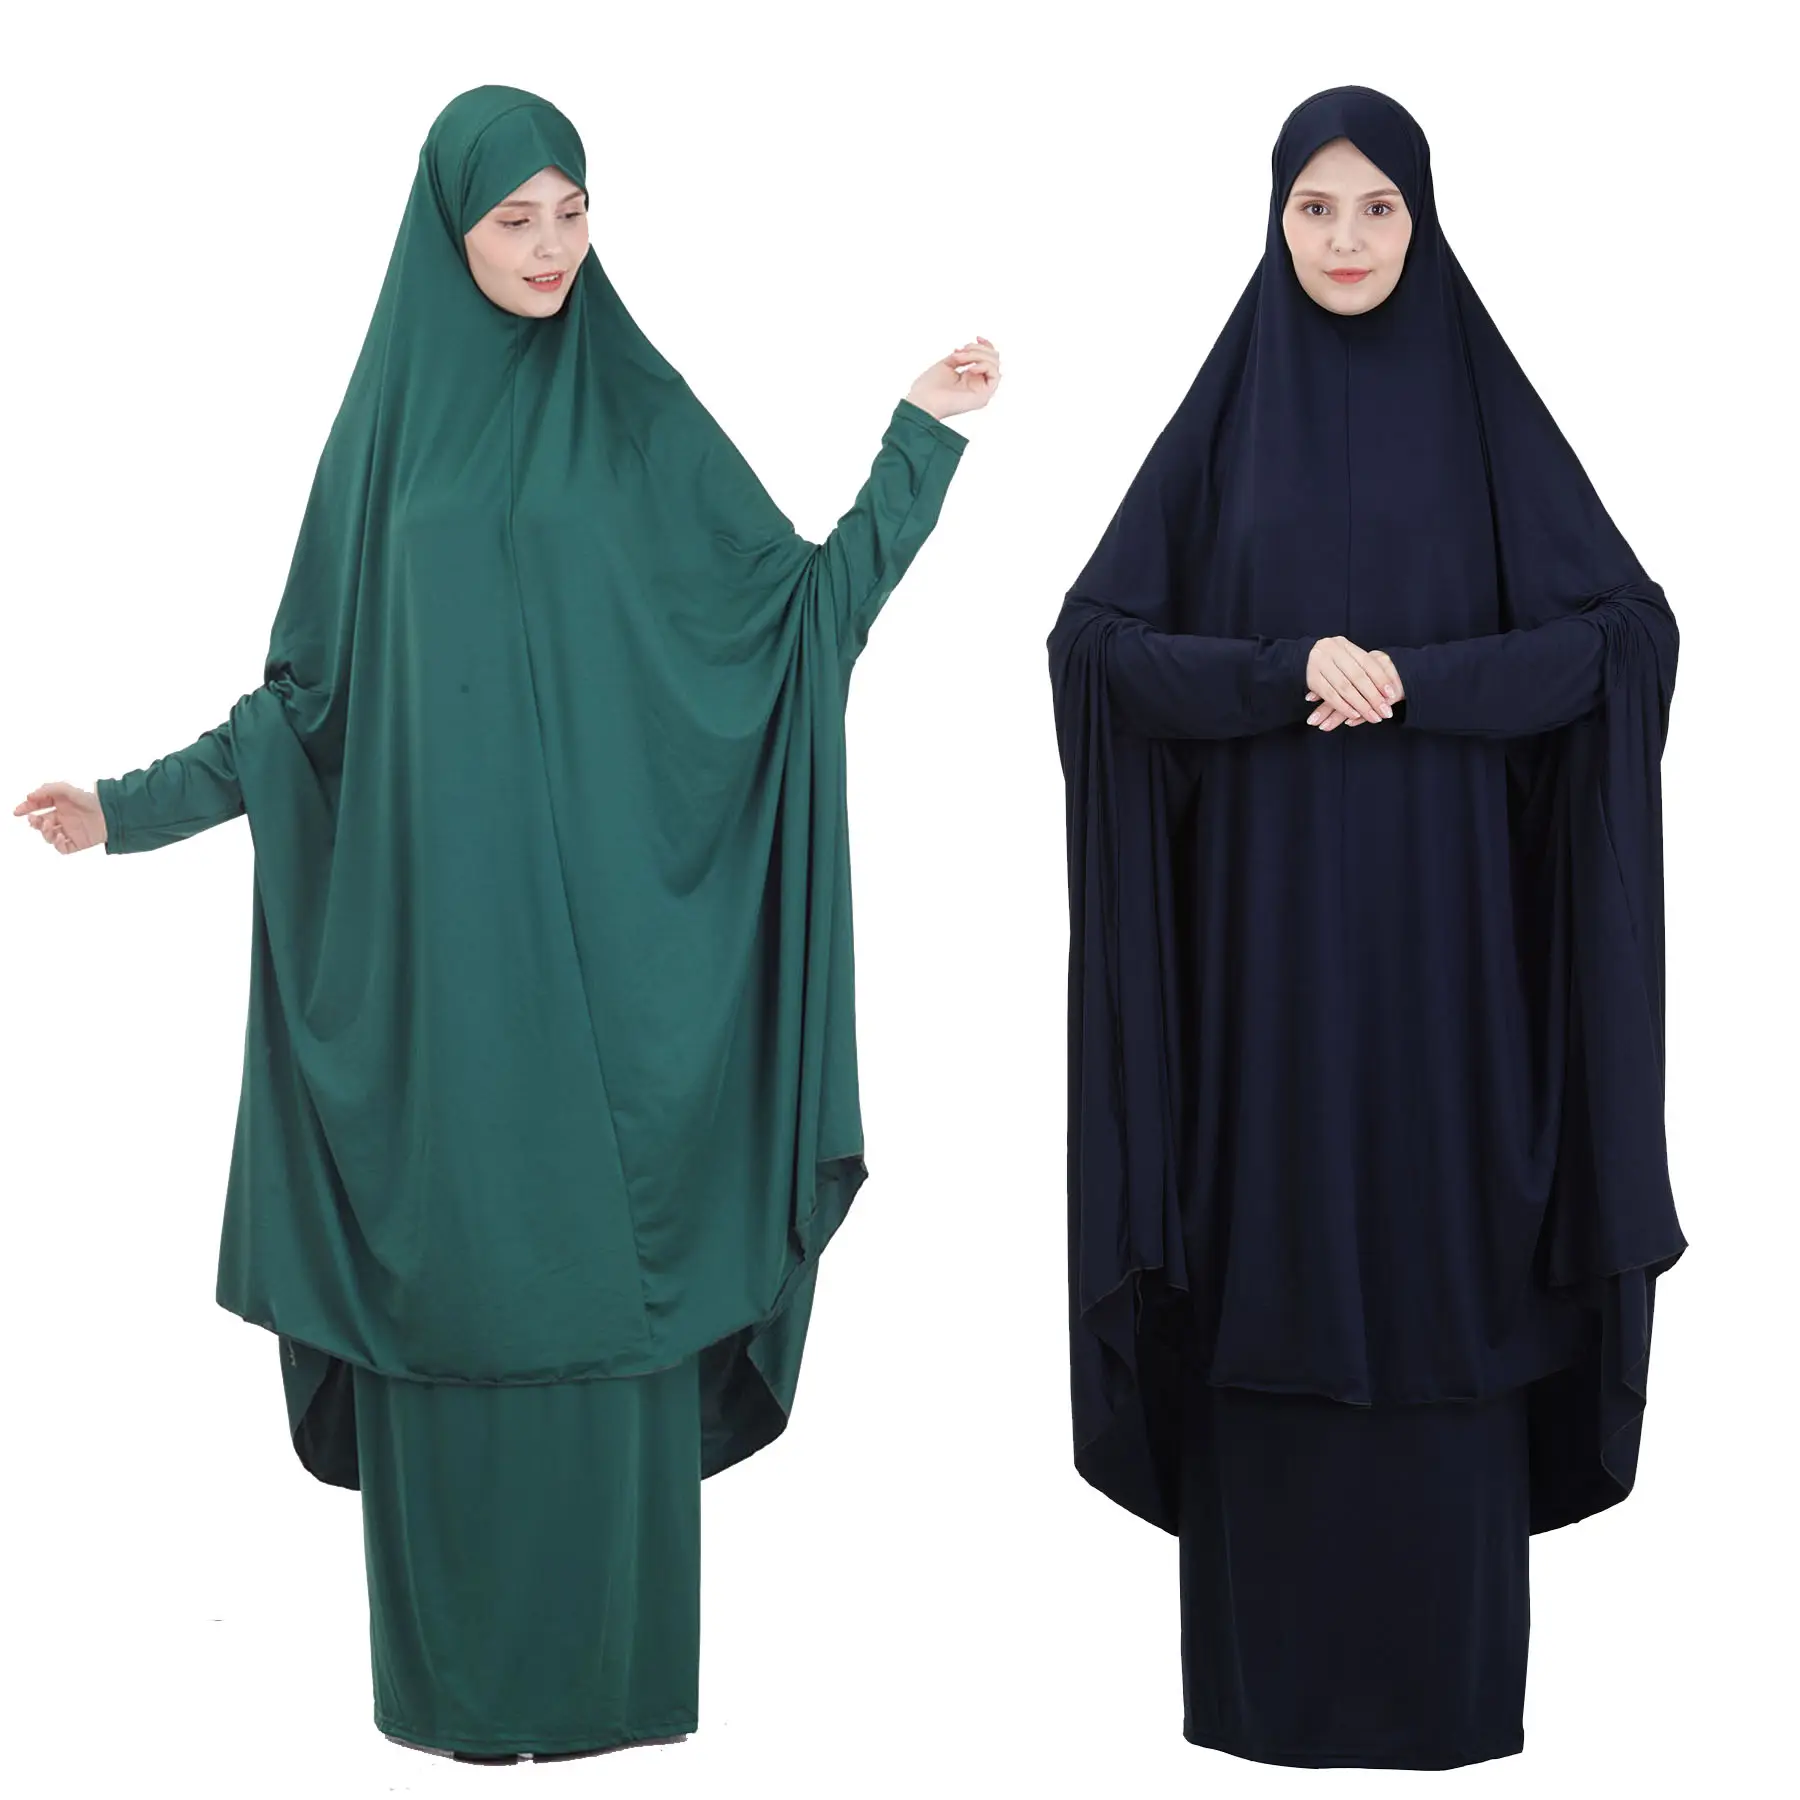 Limanying factory Supply Hot sale jilbab abaya 14 colors available muslim prayer dress women jilbab muslim dress